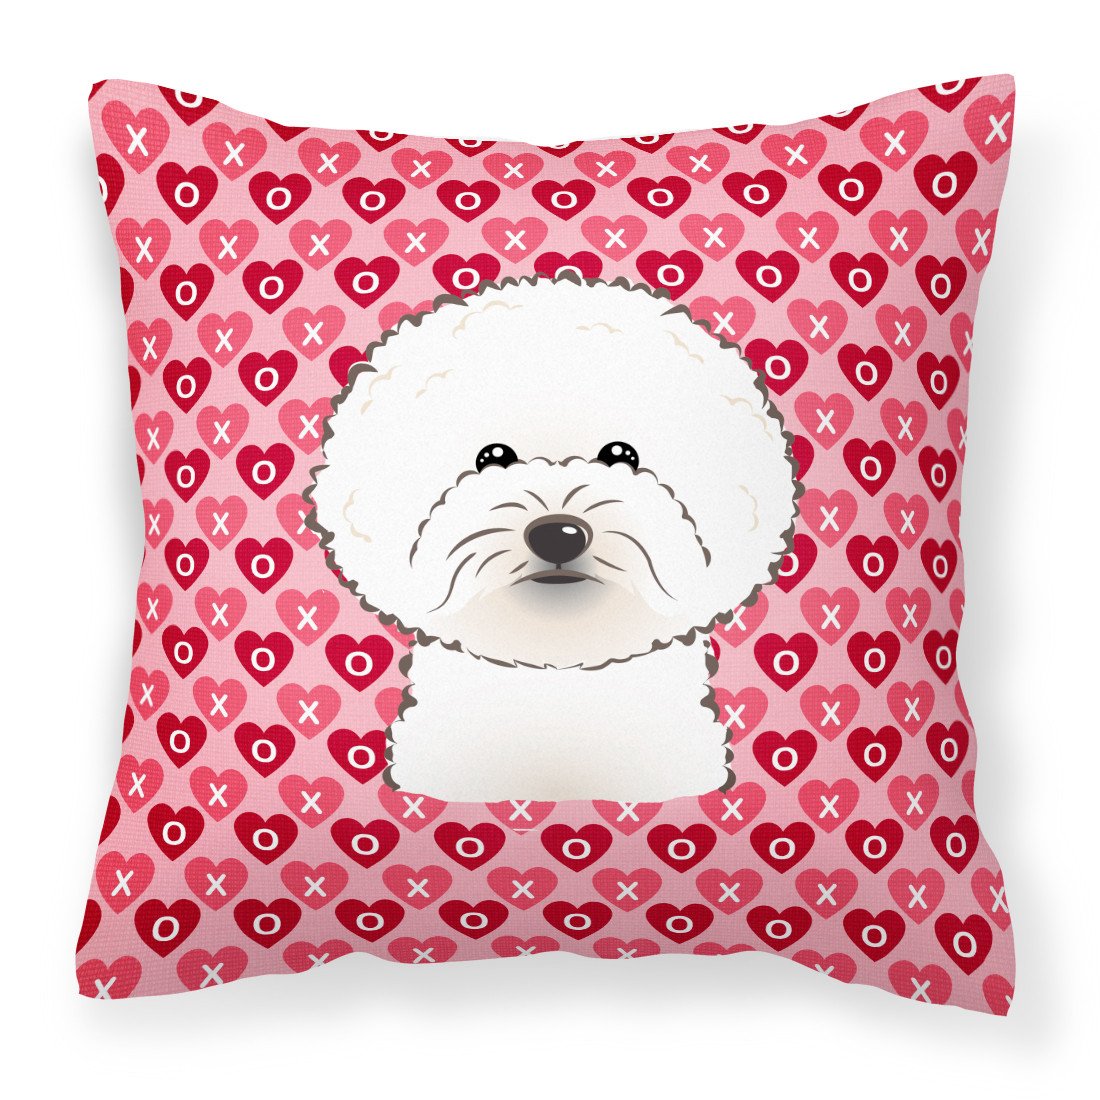 Bichon Frise Hearts Fabric Decorative Pillow BB5287PW1818 by Caroline's Treasures